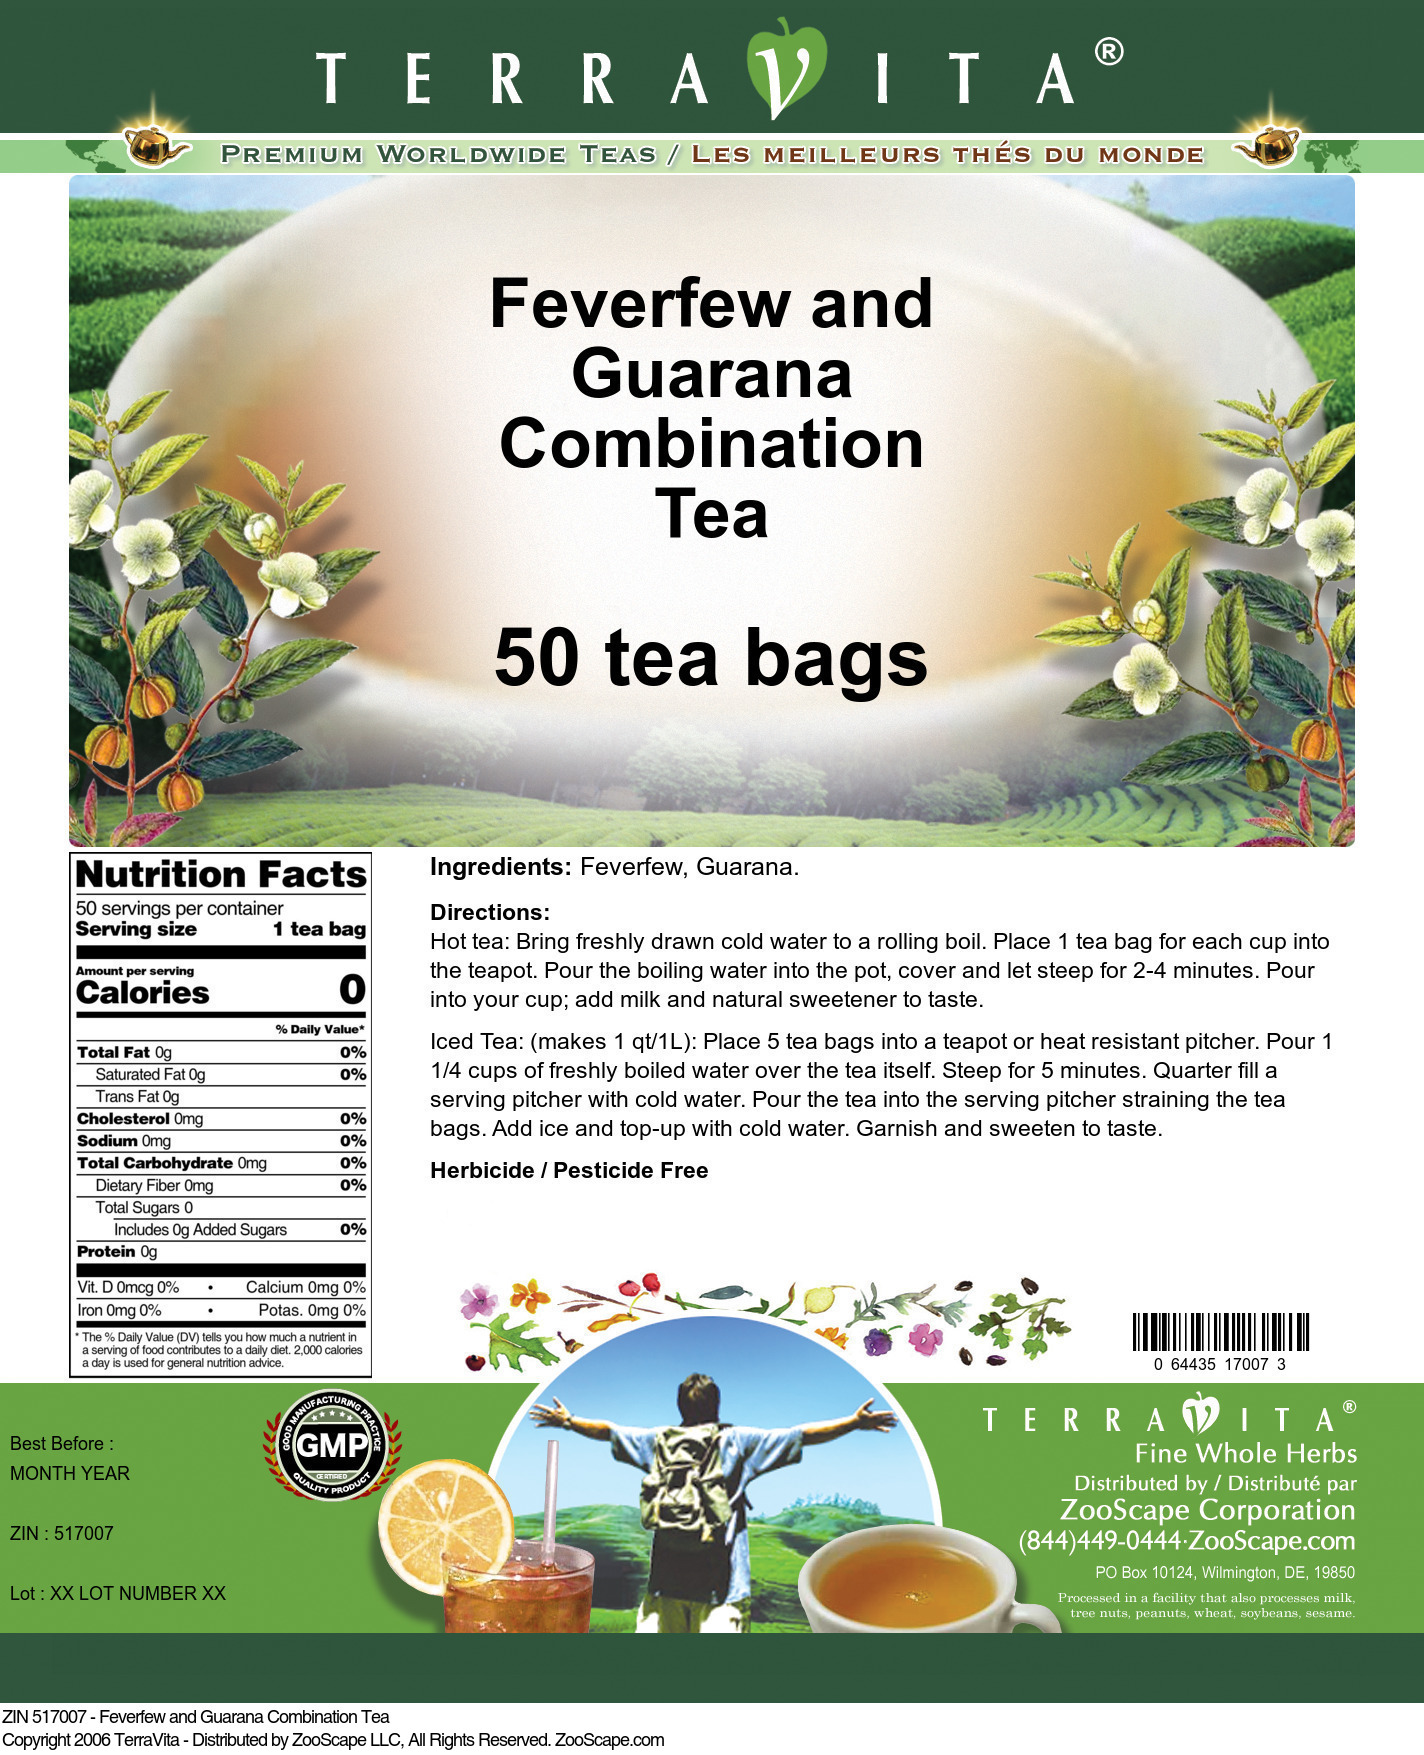 Feverfew and Guarana Combination Tea - Label